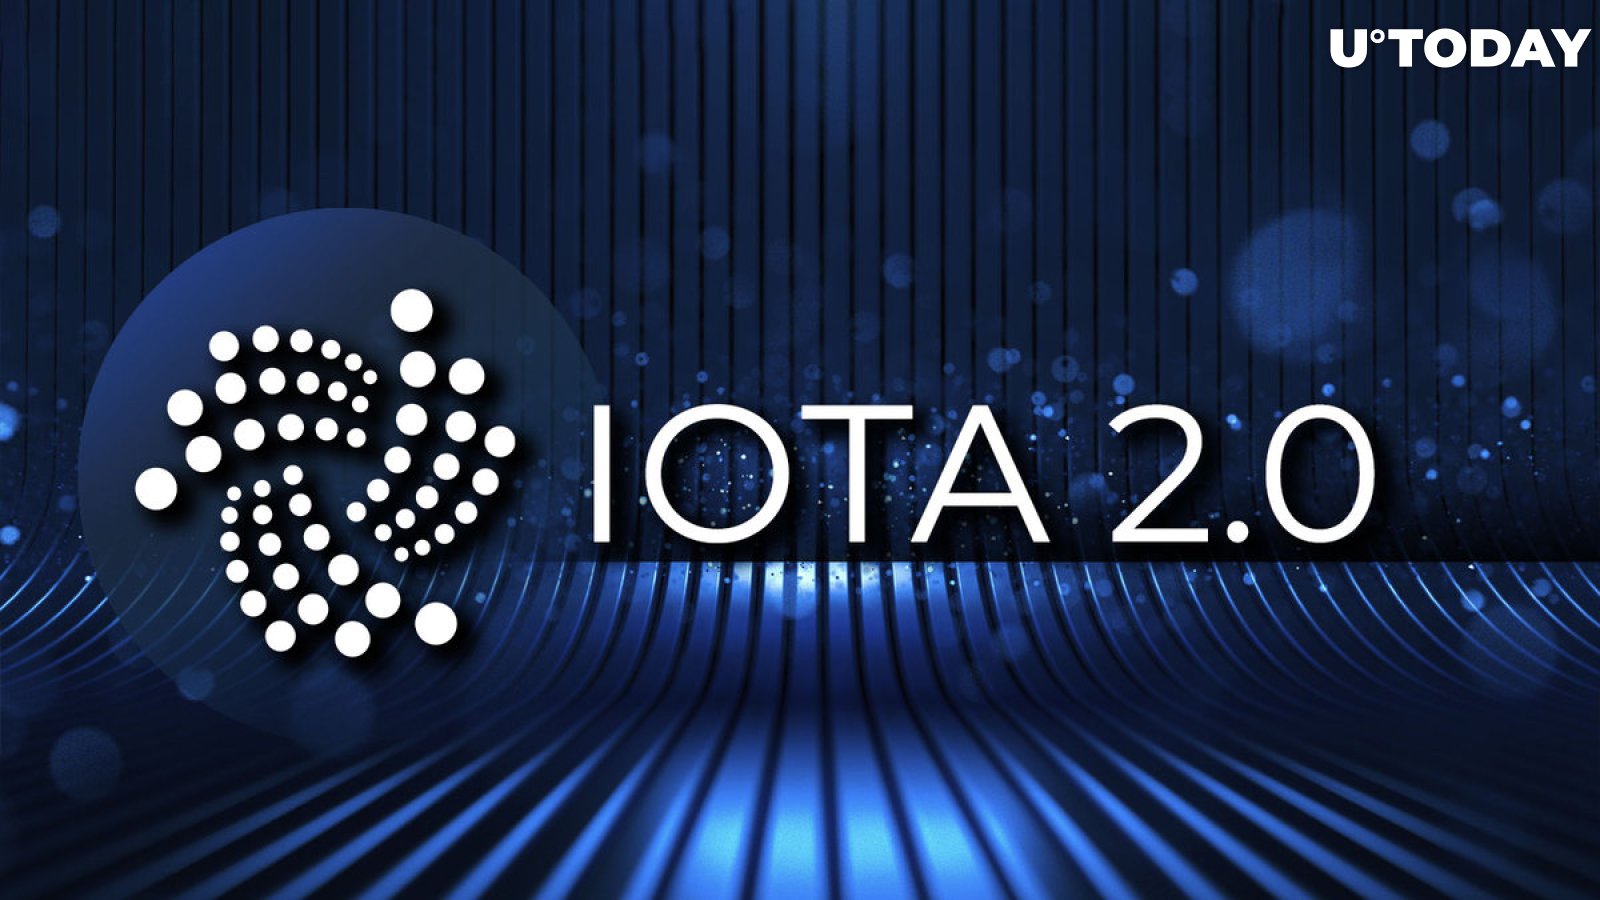 IOTA achieves major milestone and launches IOTA 2.0 public testnet